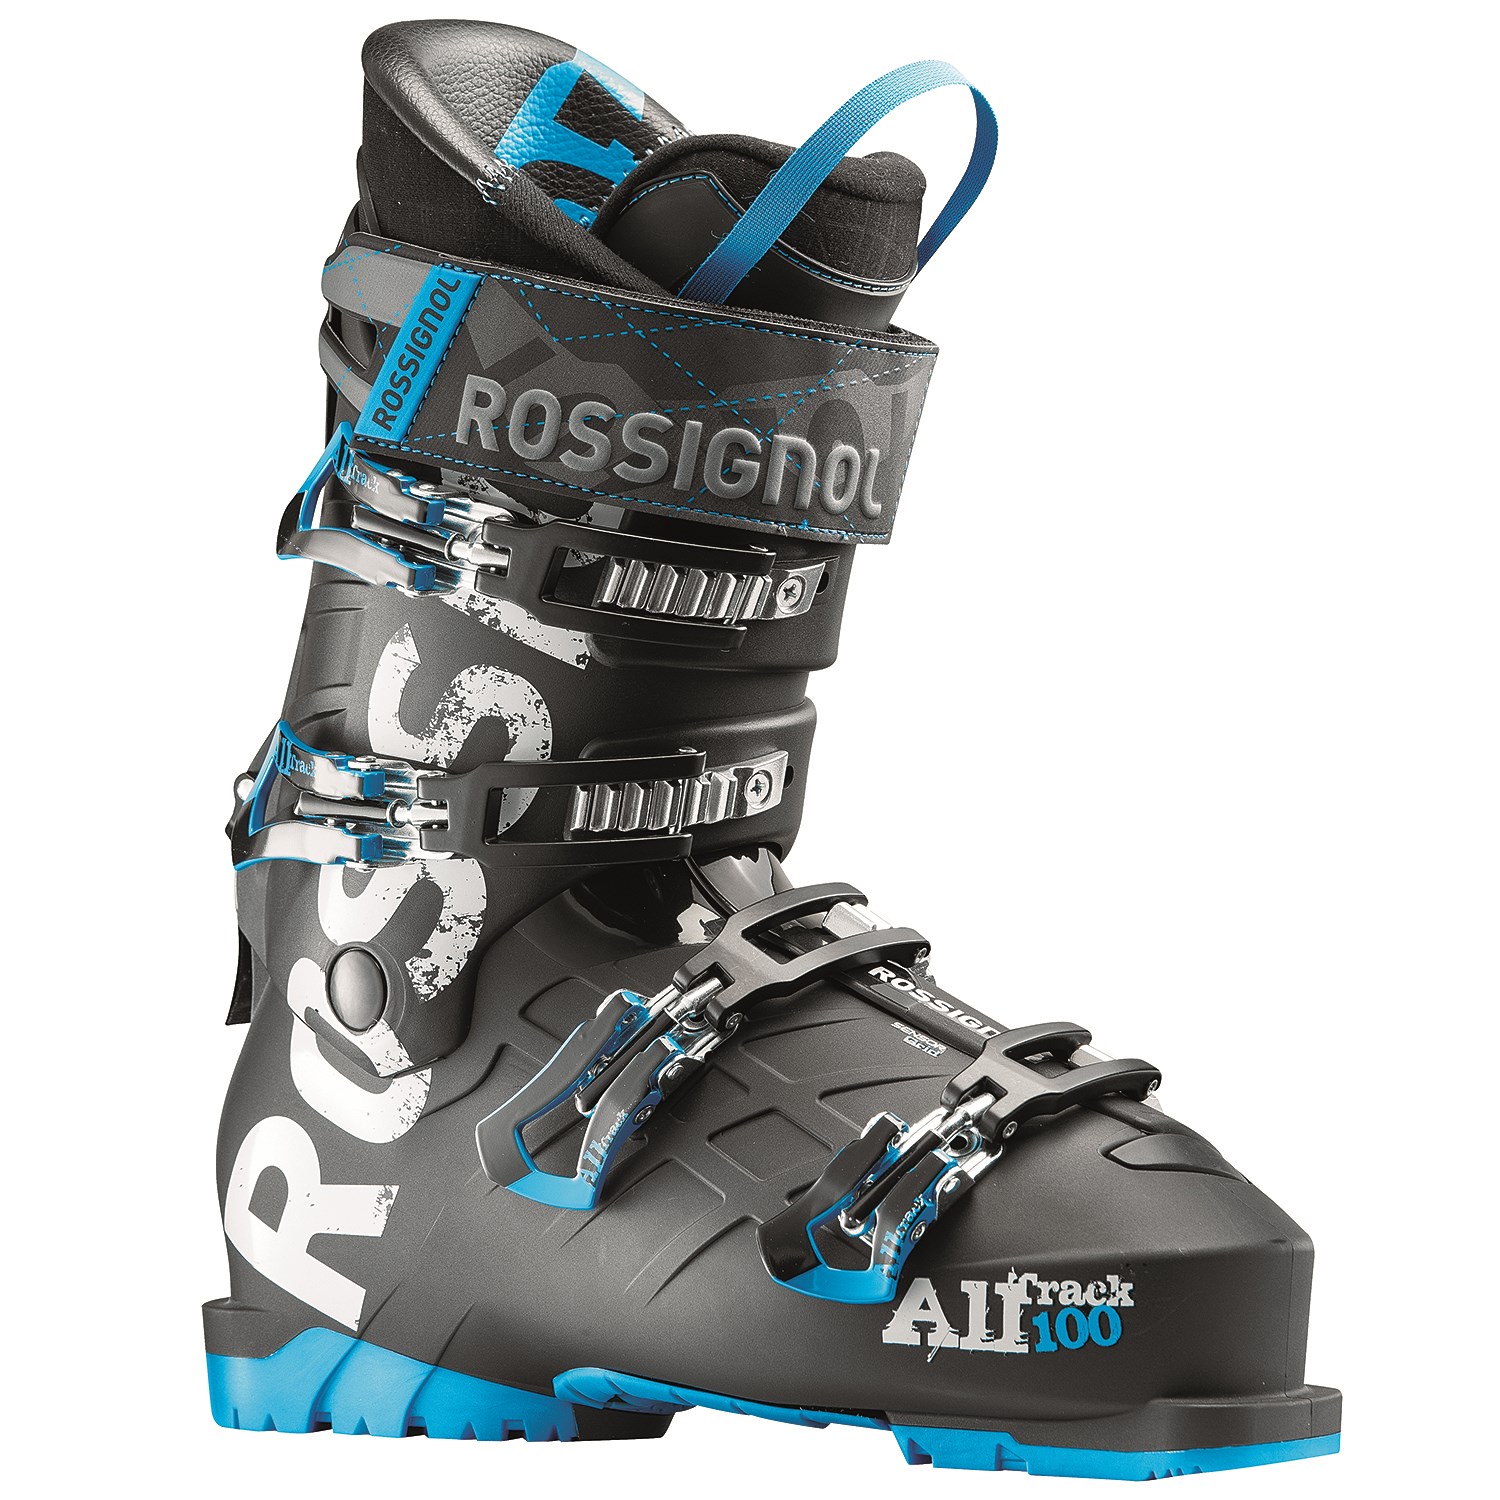 Rossignol AllTrack 100 Ski Boots 2017 | evo